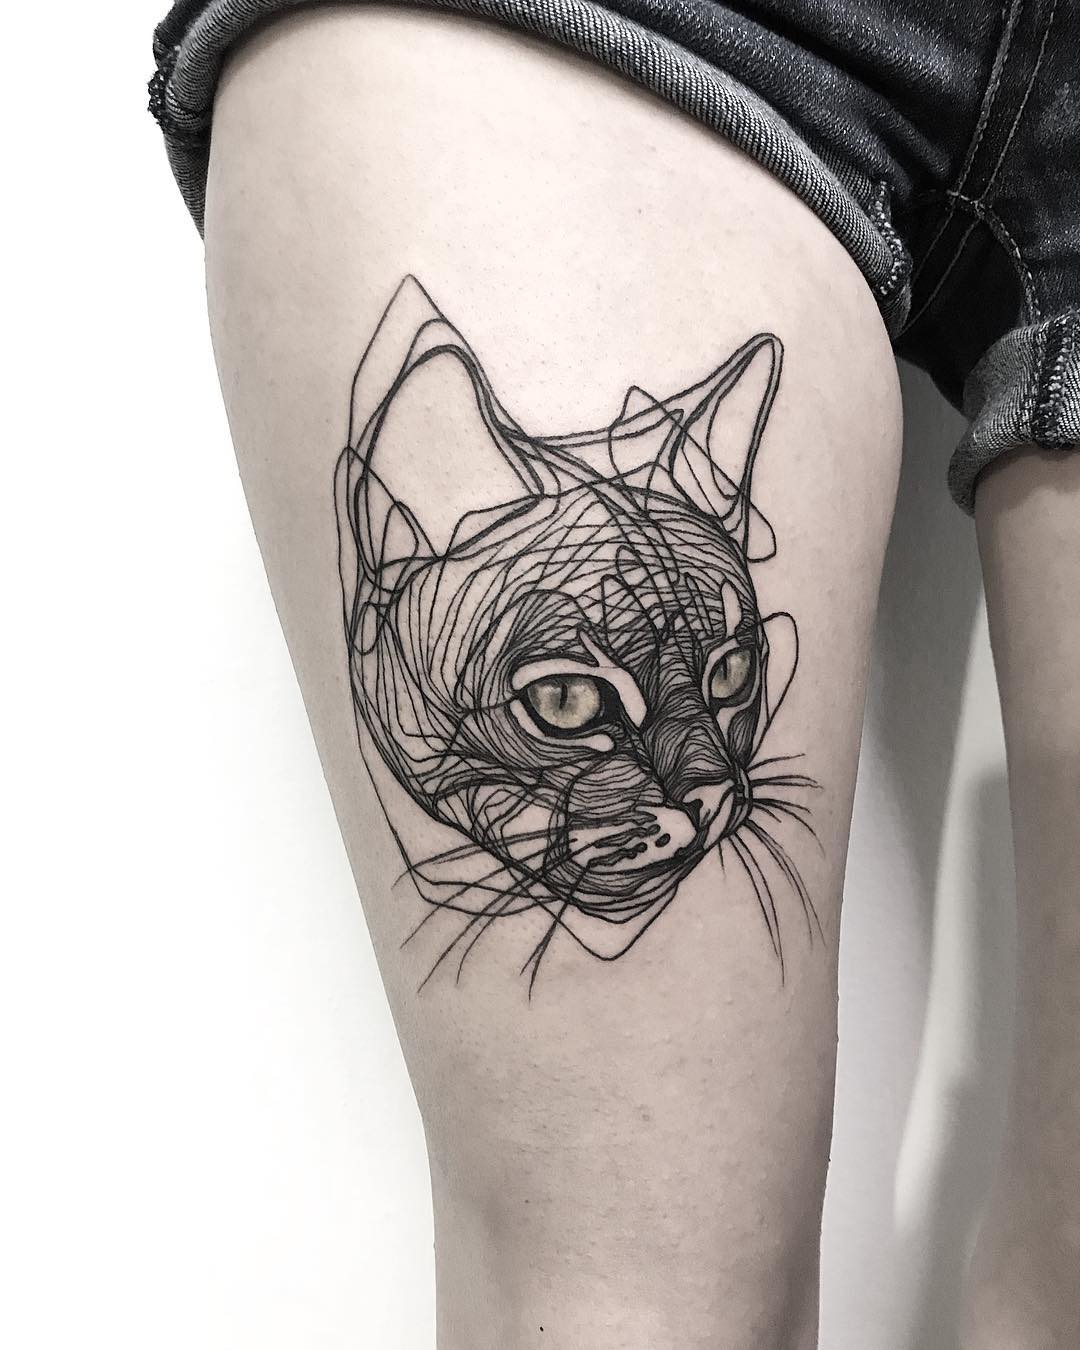 cat-tattoo-designs-meanings-spiritual-luck-2019